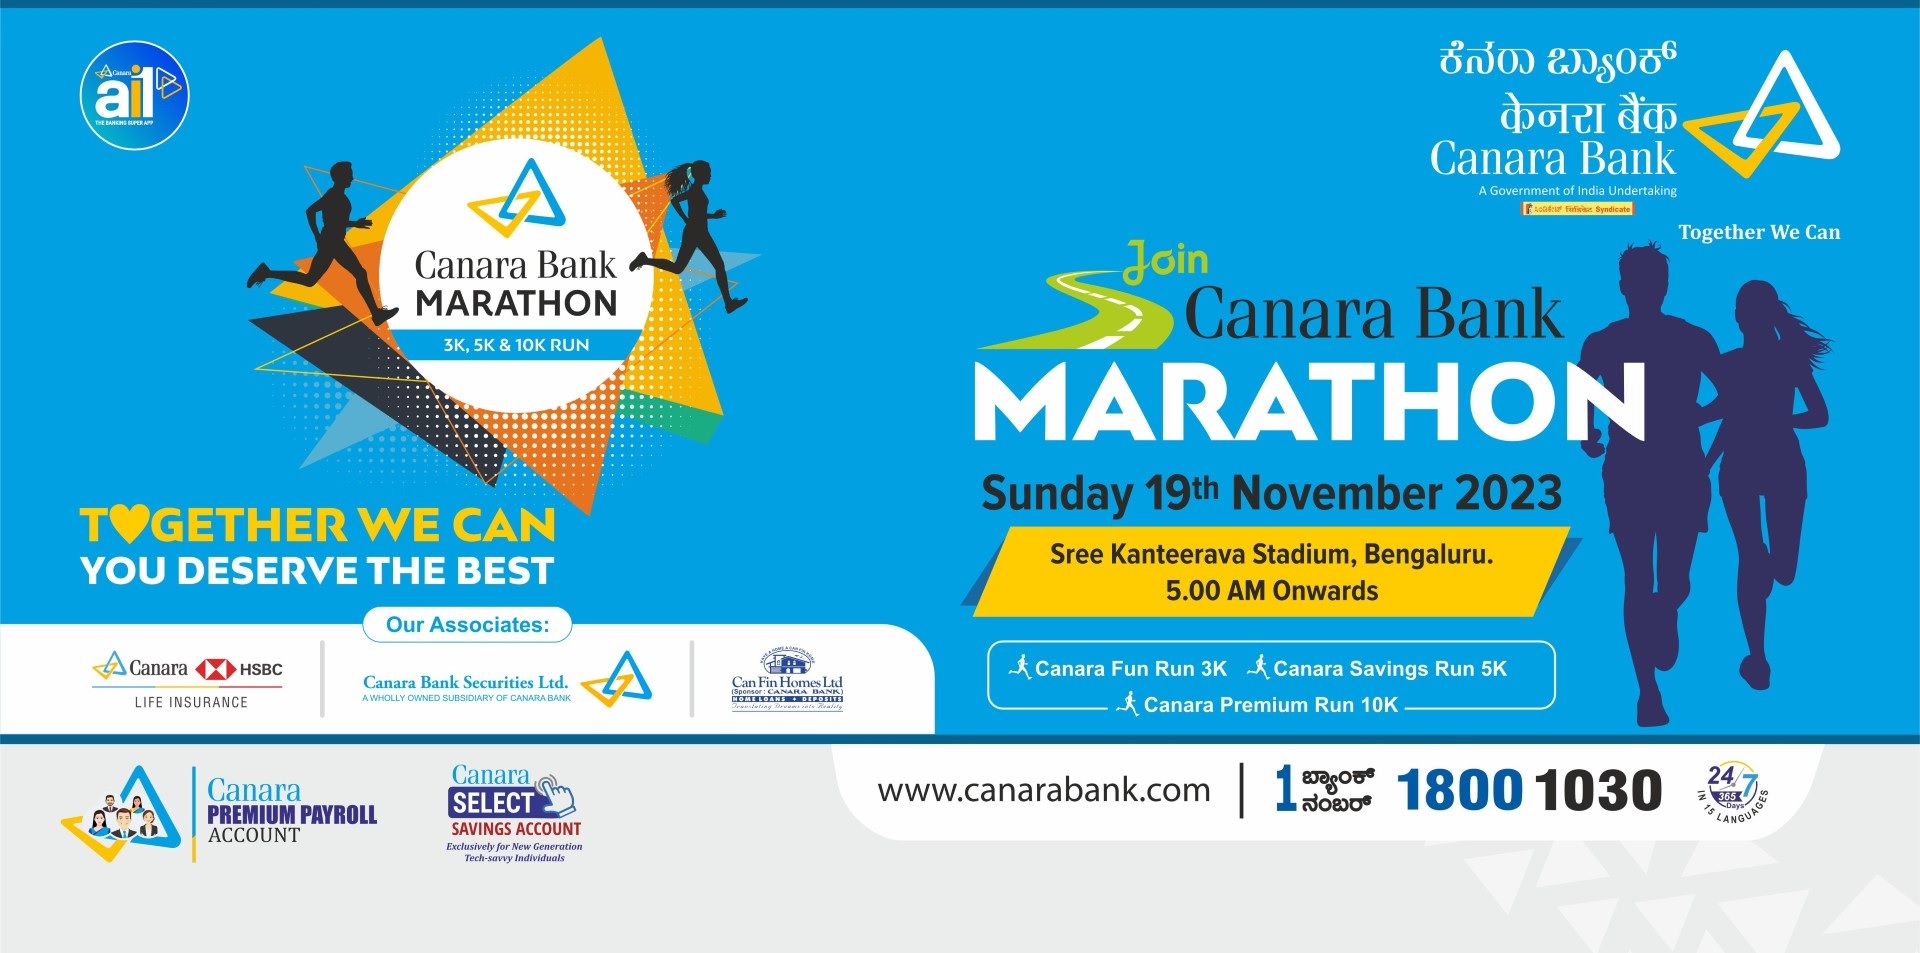 Canara Bank Marathon 2023